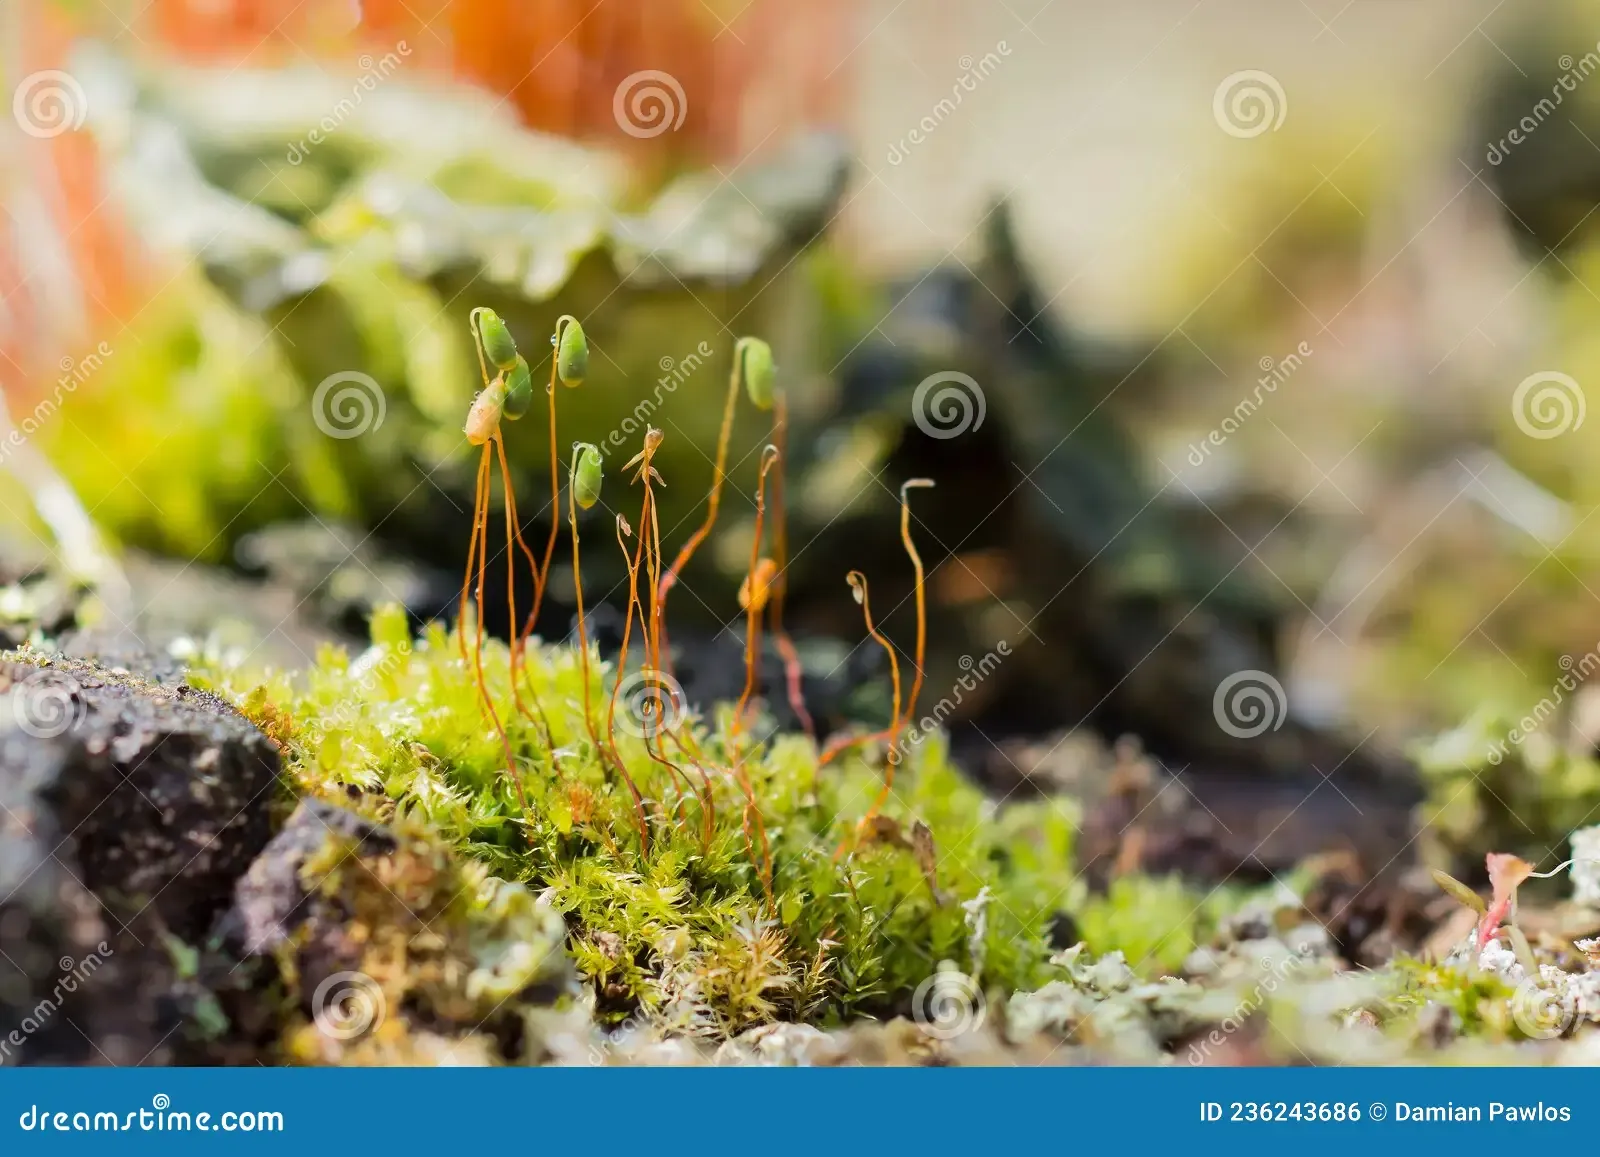 macro-shot-copper-wire-moss-pohlia-nutans-beautiful-moss-green-capsules-top-copper-stem-macro-shot-copper-236243686.jpg